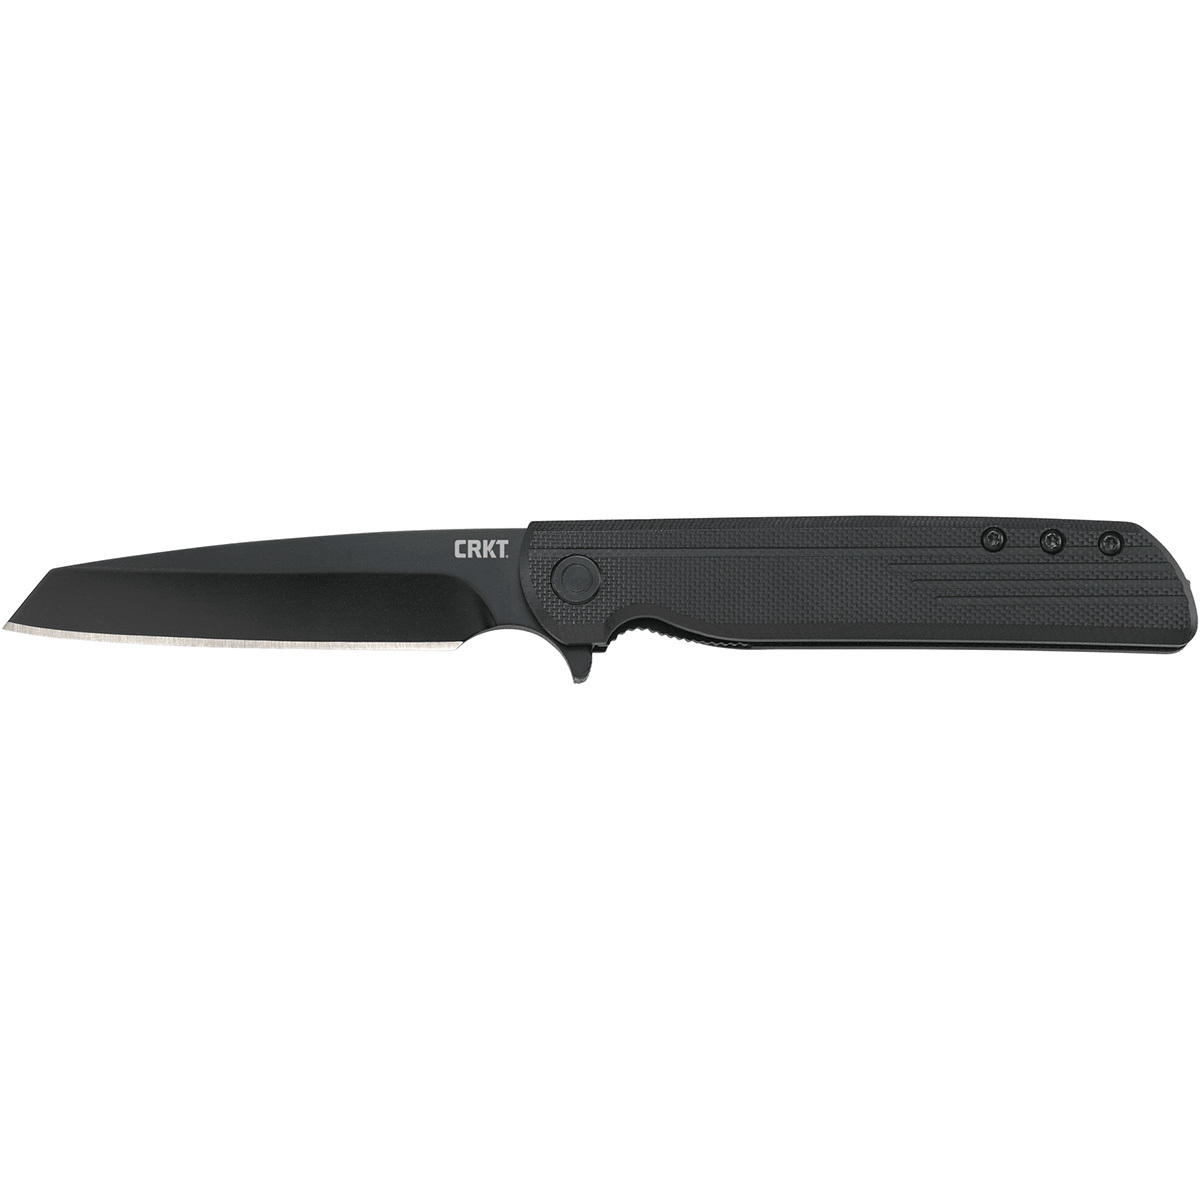 Полуавтоматический складной нож CRKT LCK+ Tanto Blackout, сталь 8Cr13MoV, рукоять термопластик GRN - фото 1